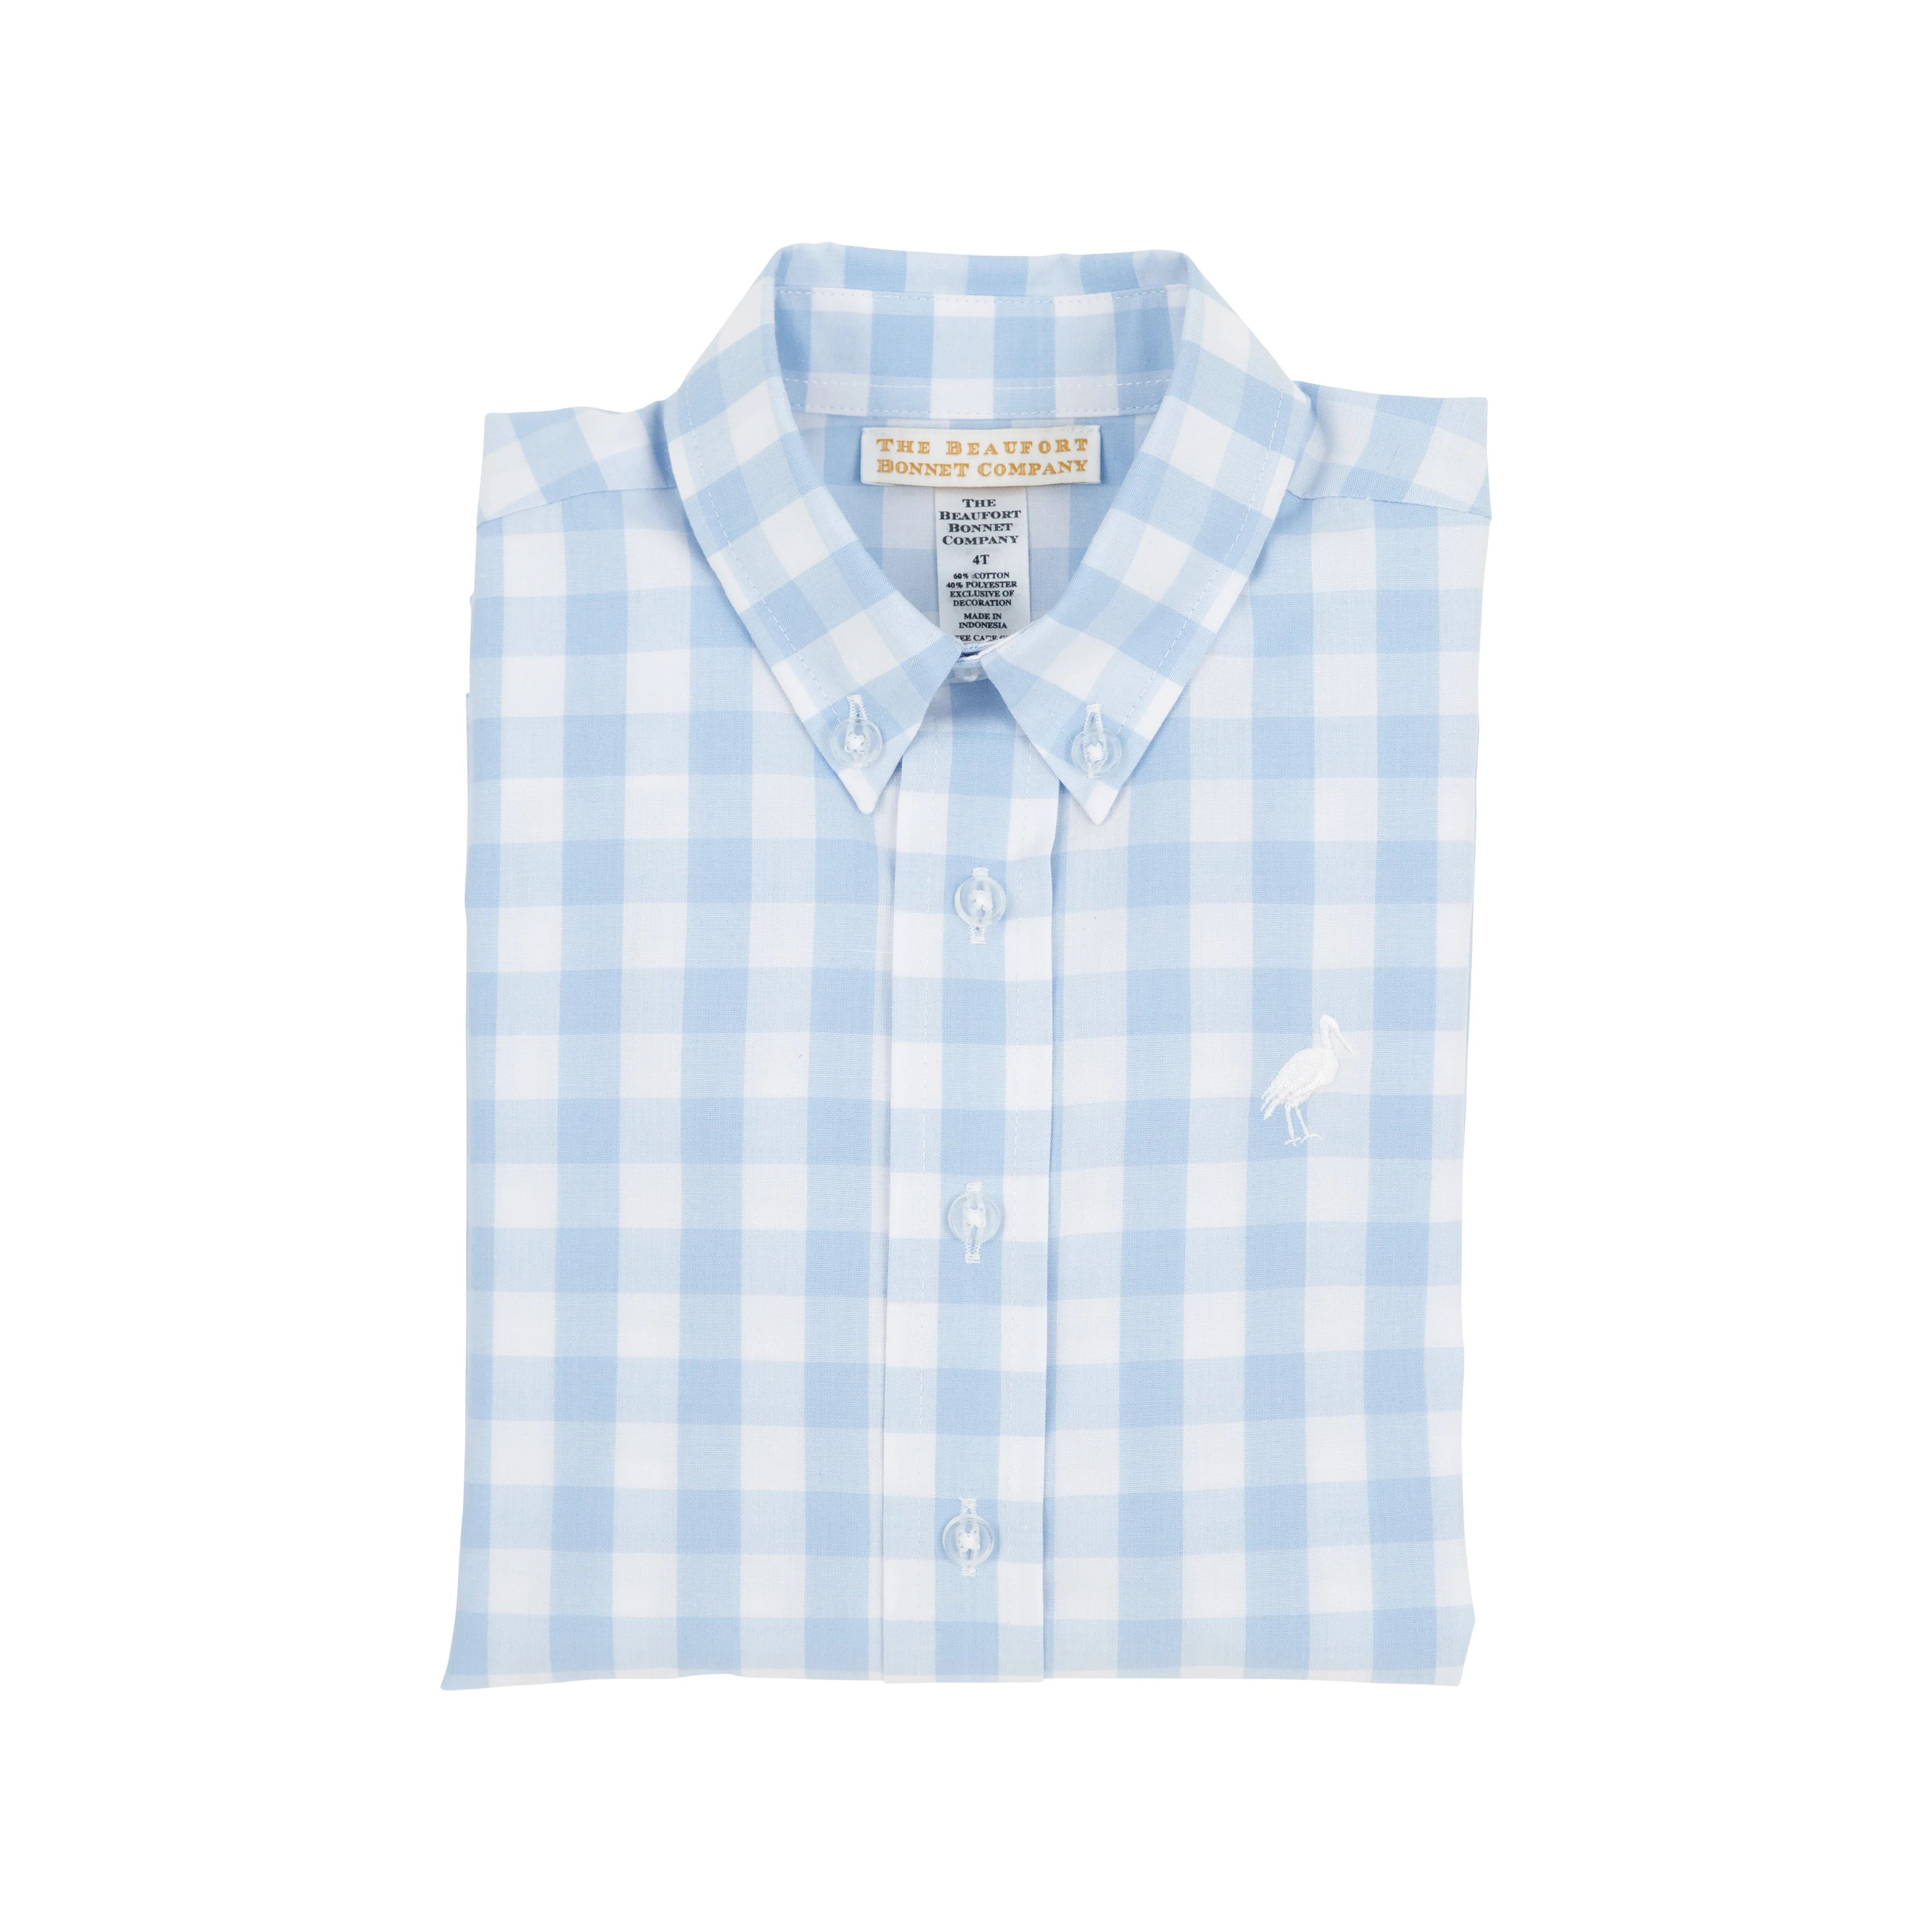 Dean's List Dress Shirt - Beale Street Blue Check with Worth Avenue White Stork | The Beaufort Bonnet Company